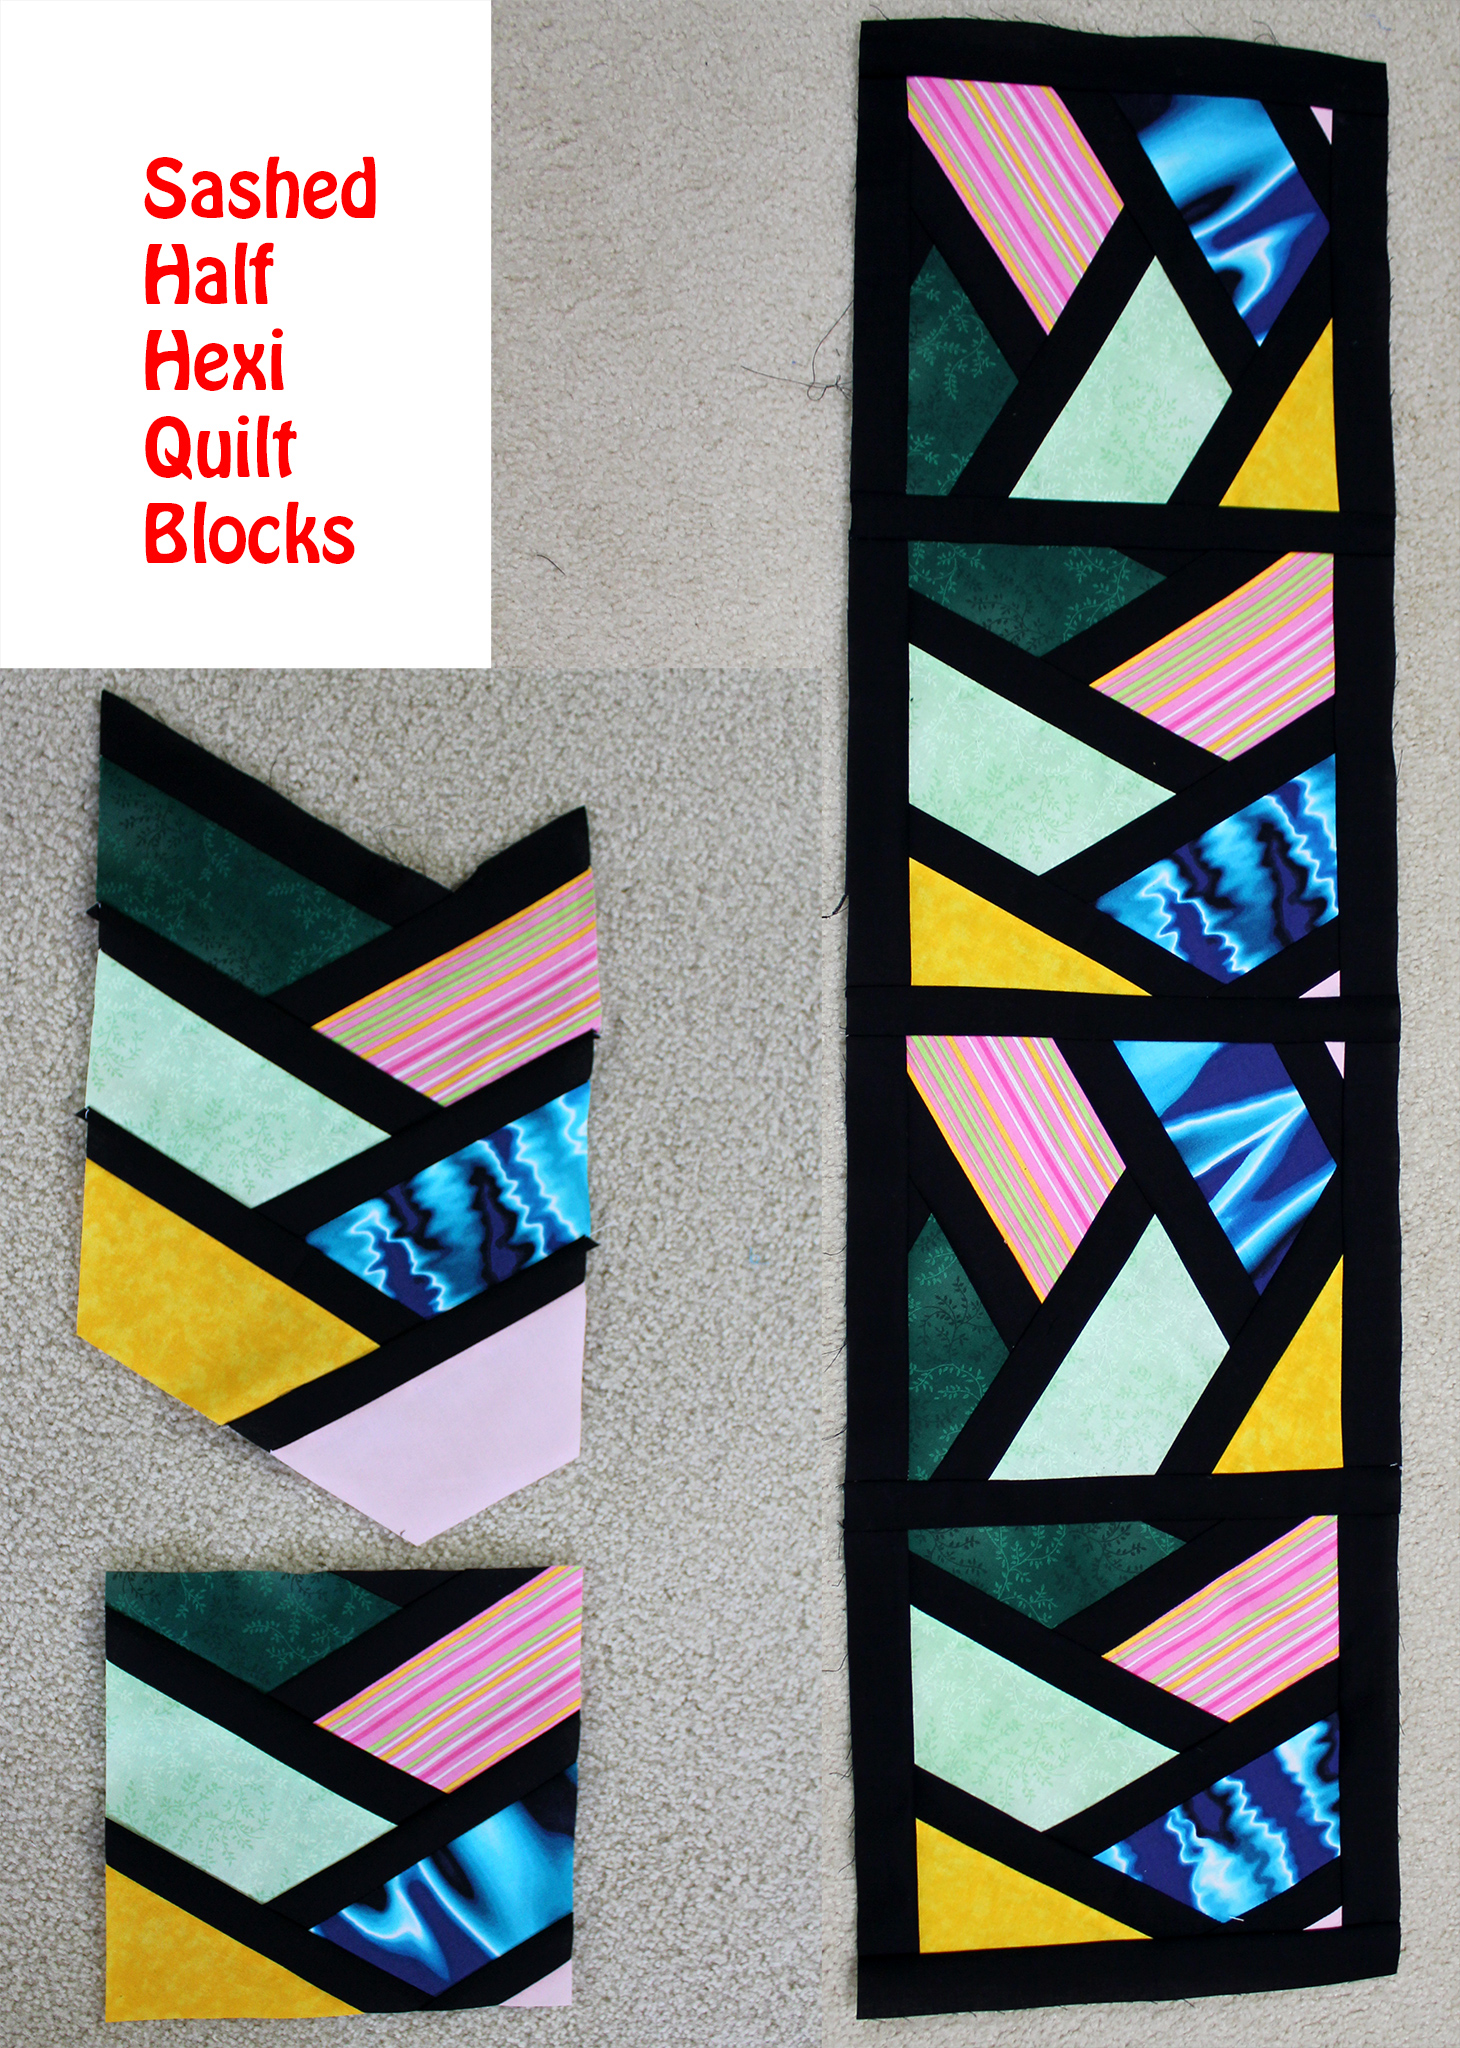 Sashed Half Hexi Quilt Blocks